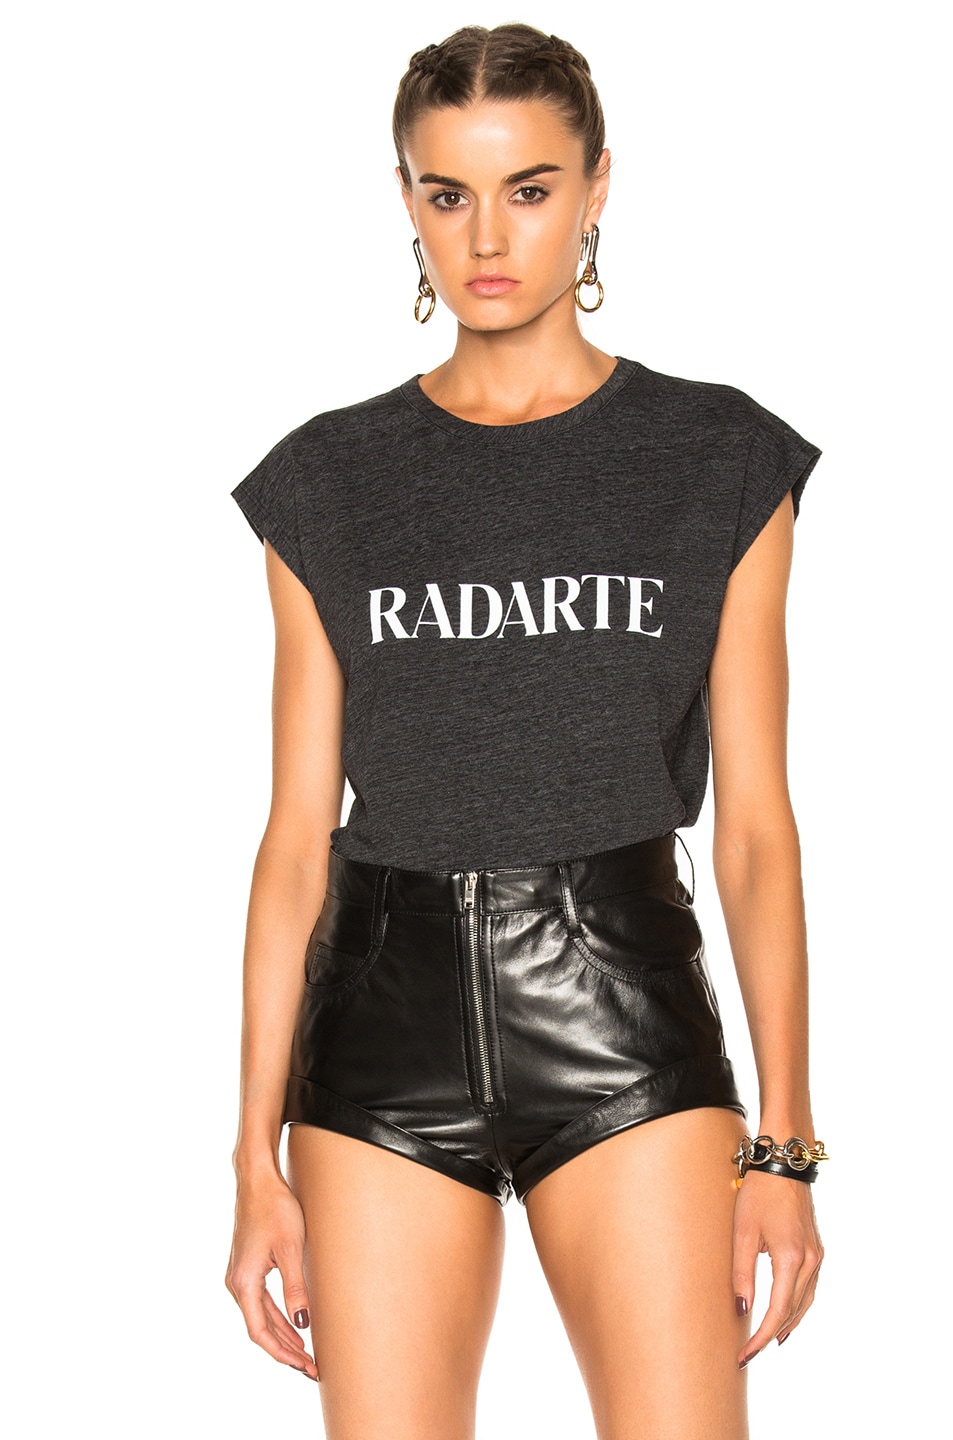 Image 1 of Rodarte Radarte Slouchy Tee in Black & White